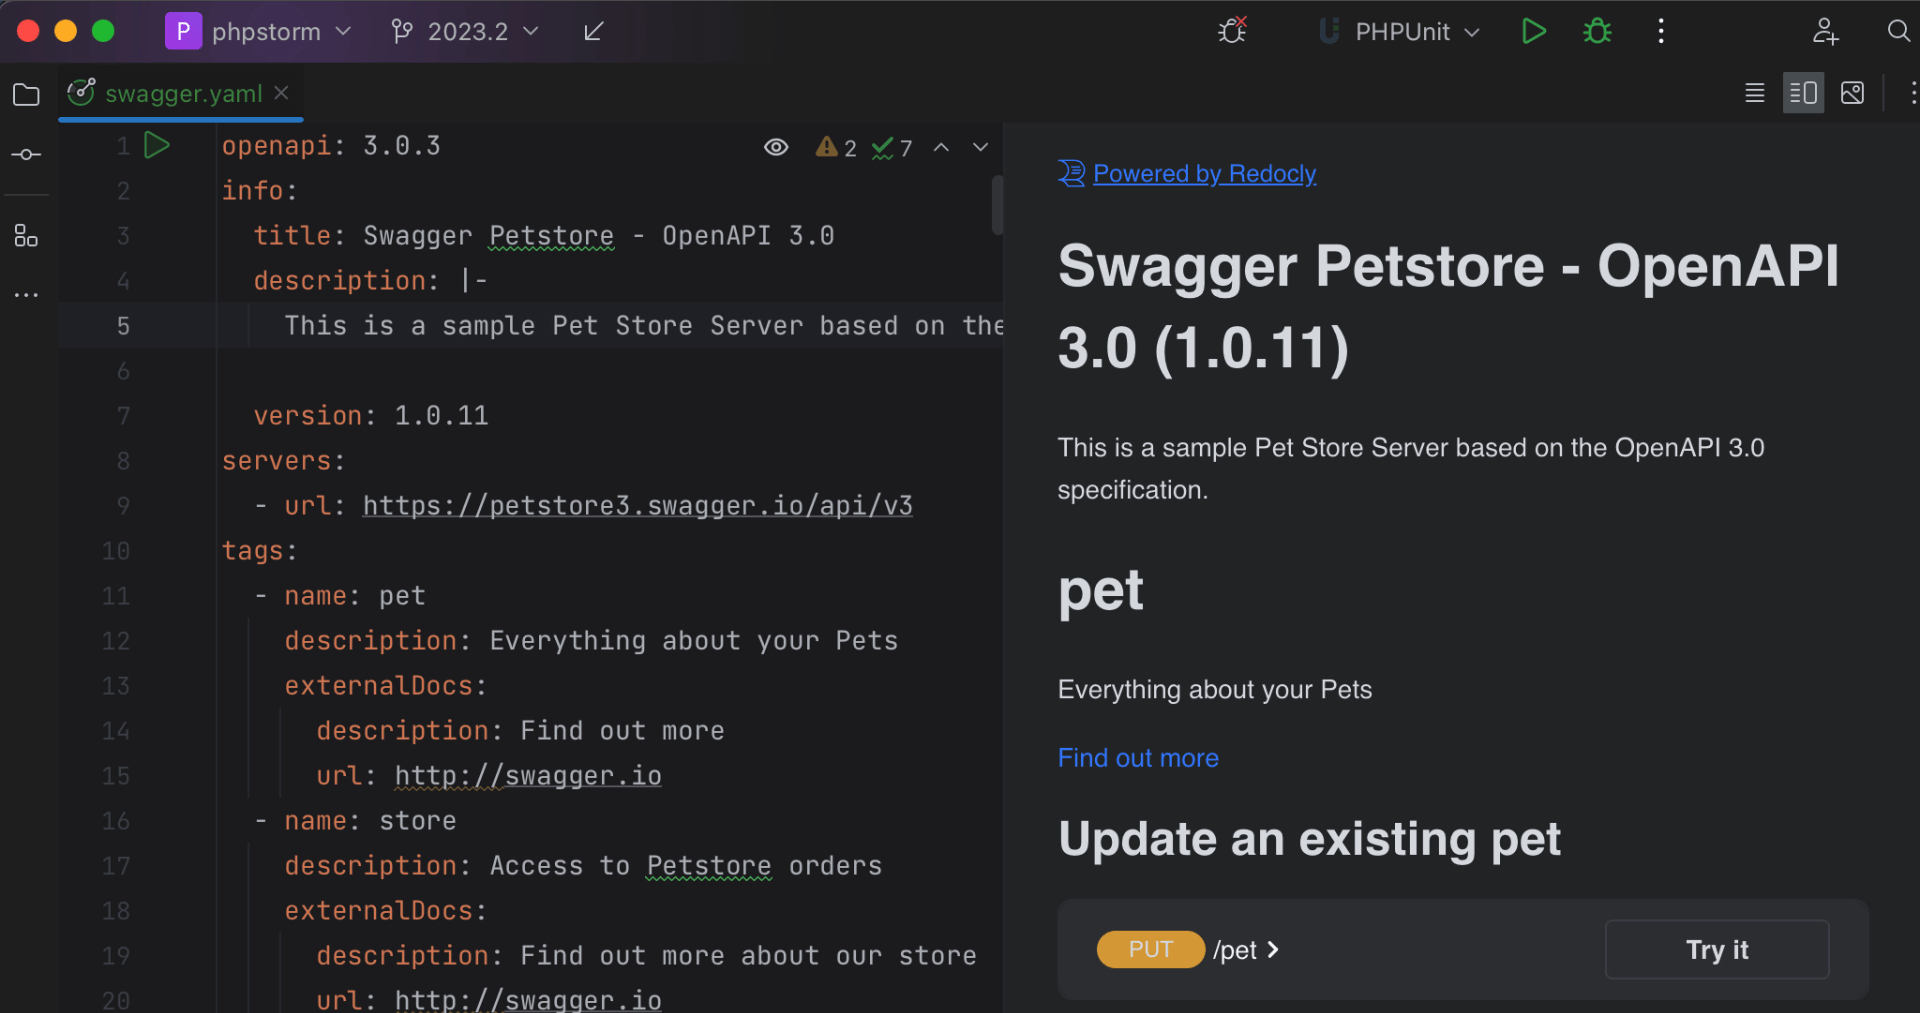 OpenAPI 和 Swagger 文件的 Redoc UI 预览